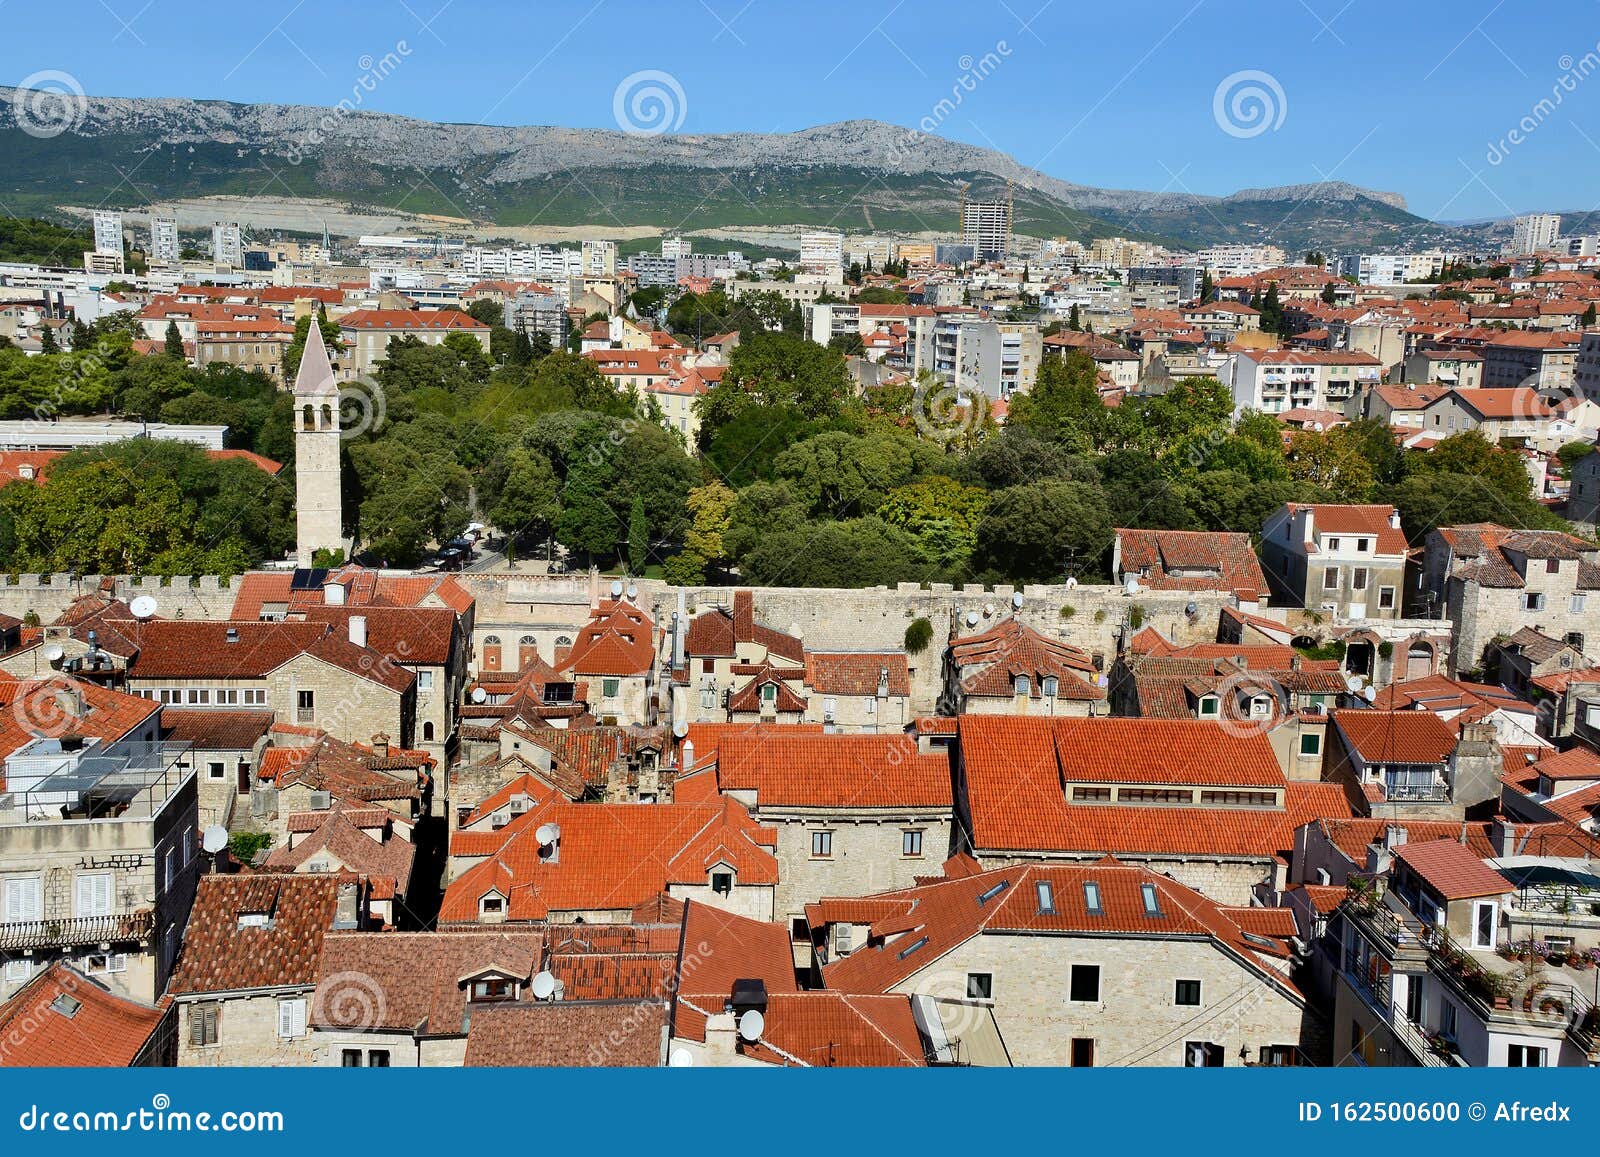 Split - Virtual Tour of the Biggest City in Dalmatia